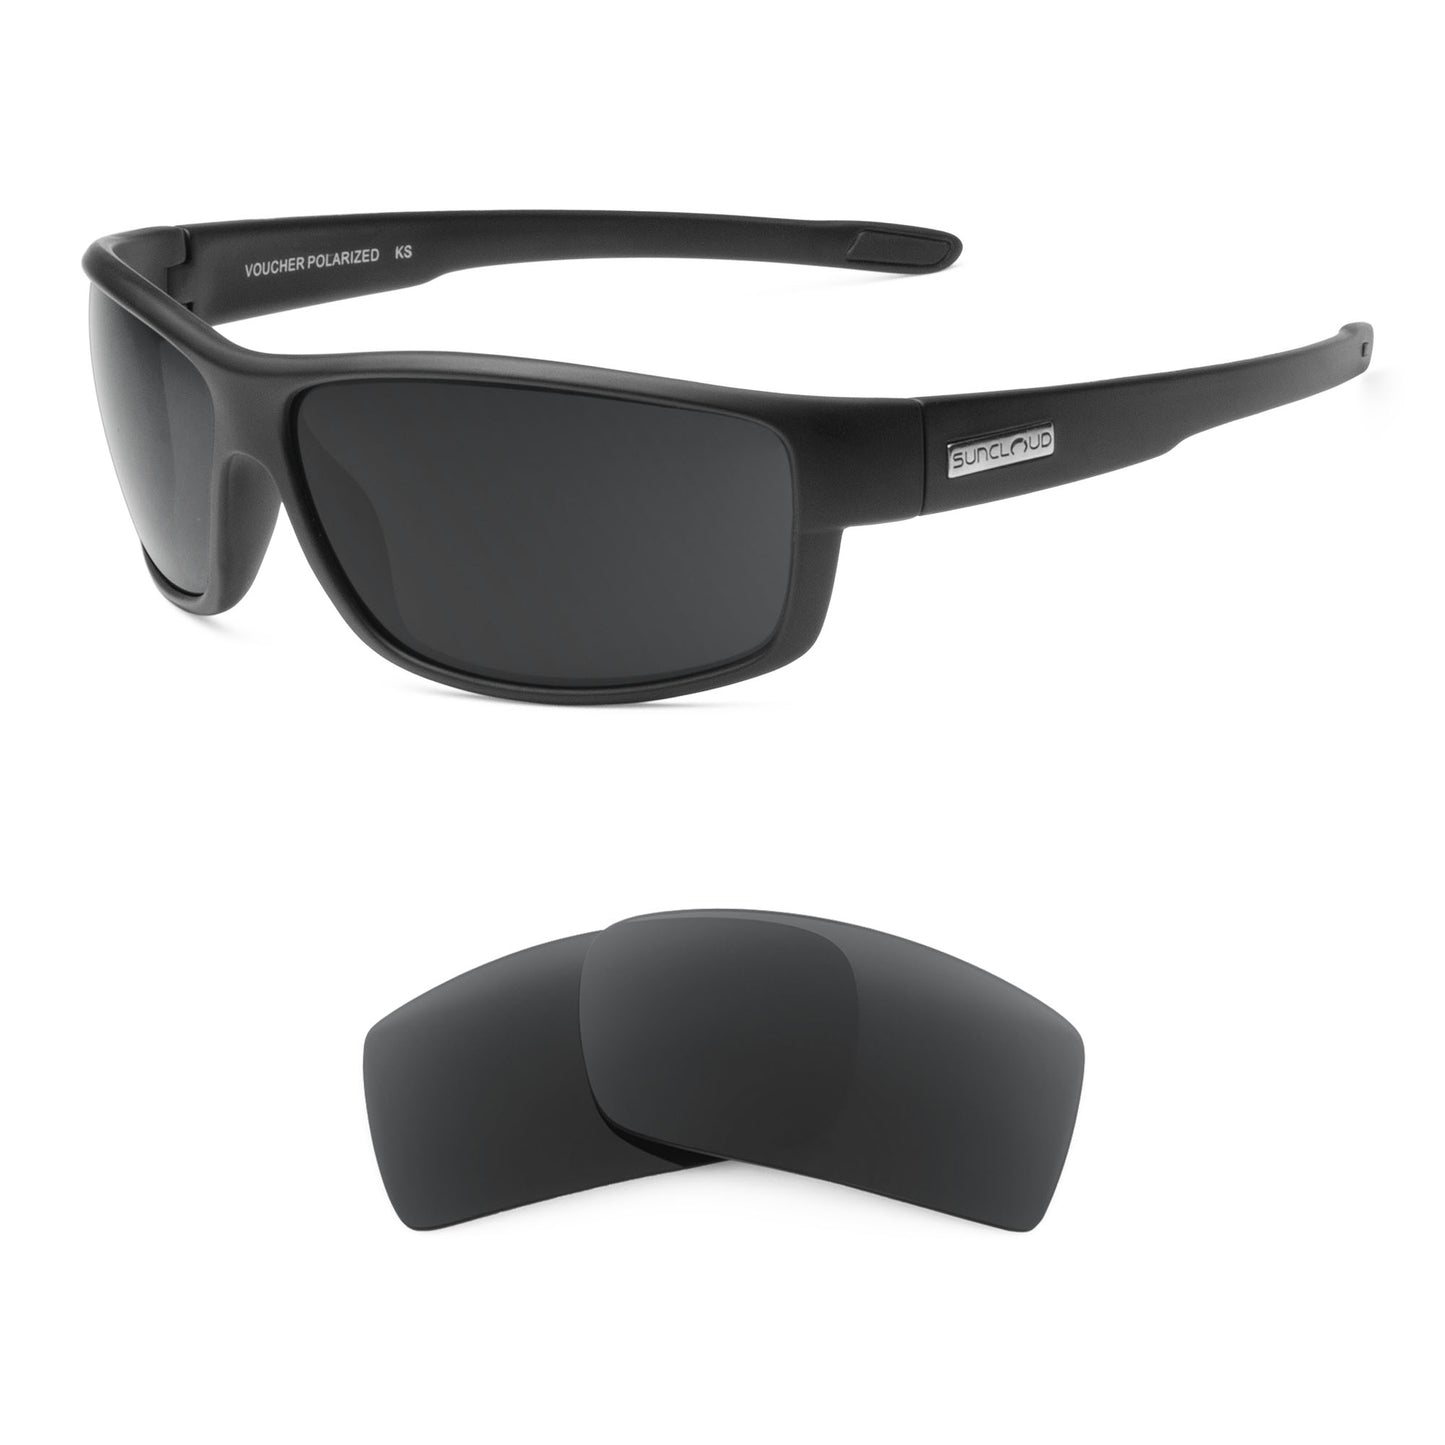 Suncloud Voucher sunglasses with replacement lenses